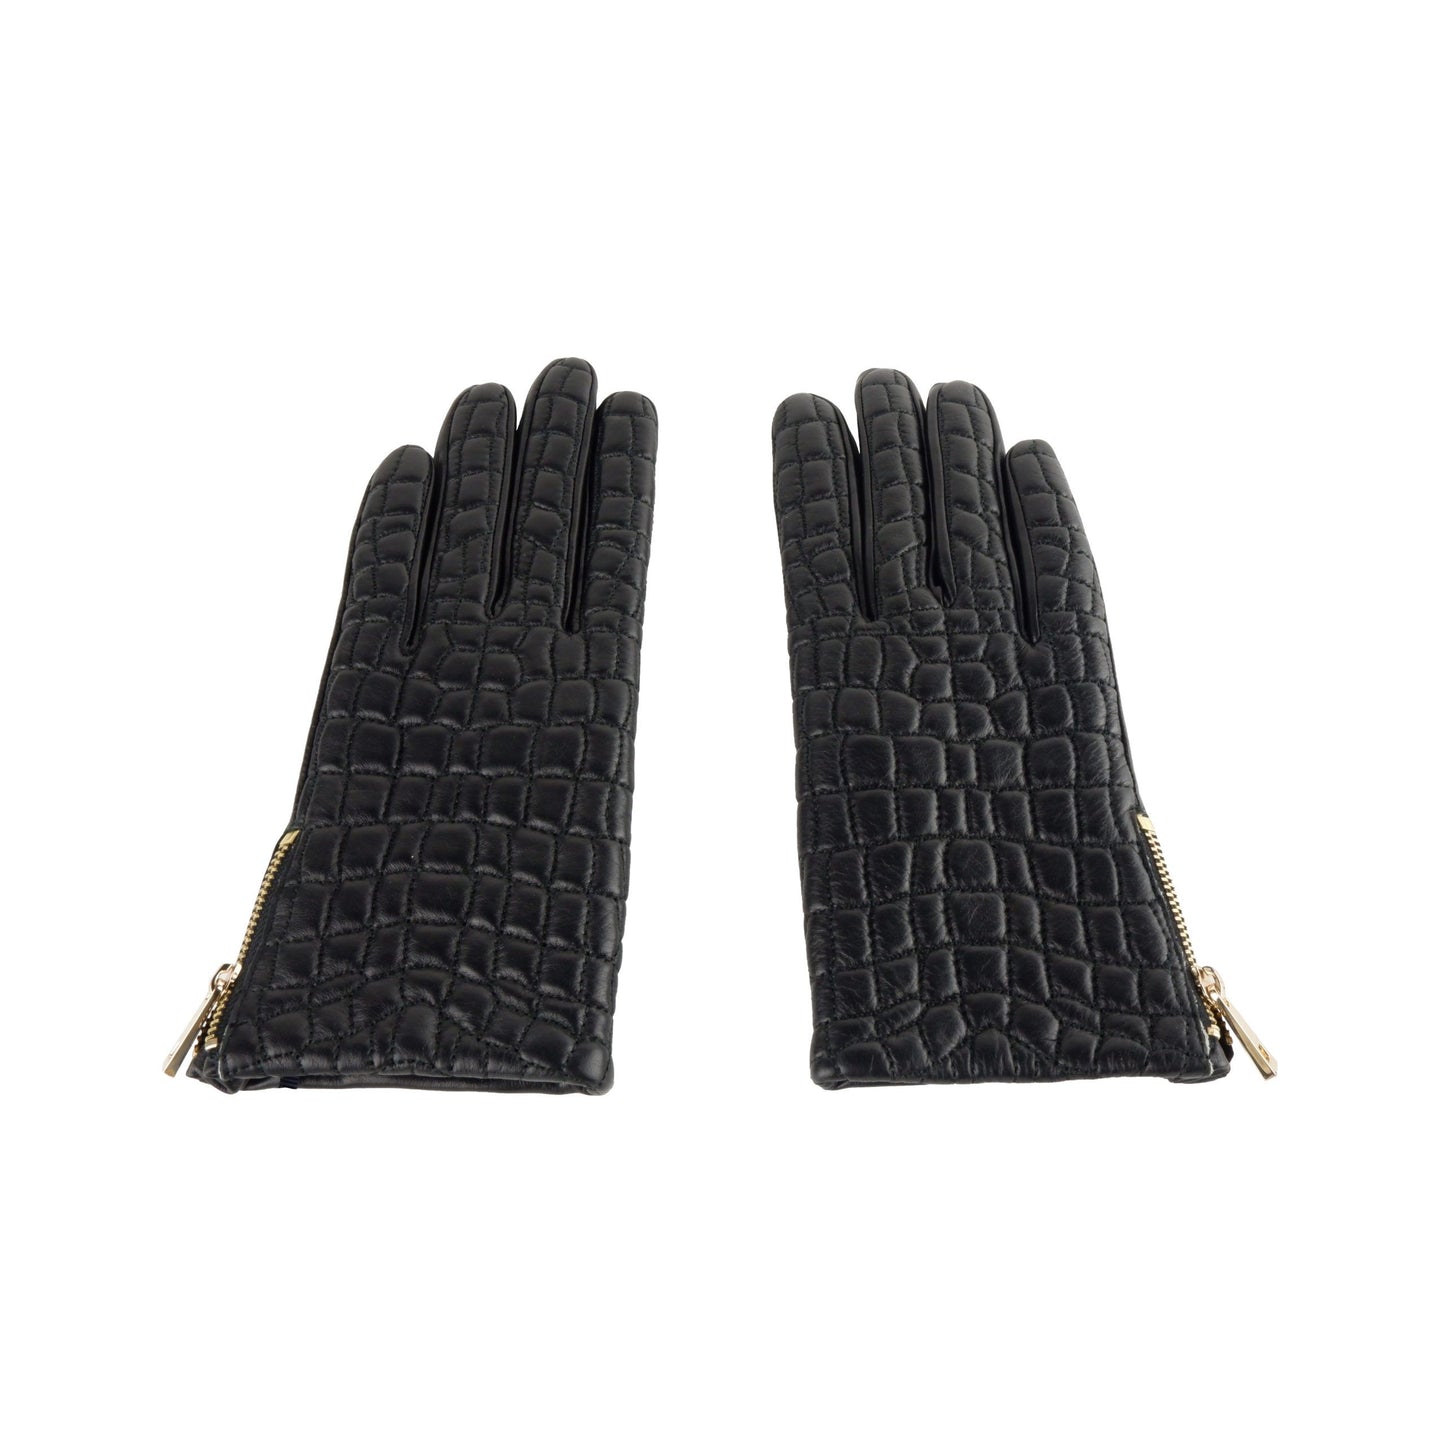 Elegant Black Lamb Leather Gloves